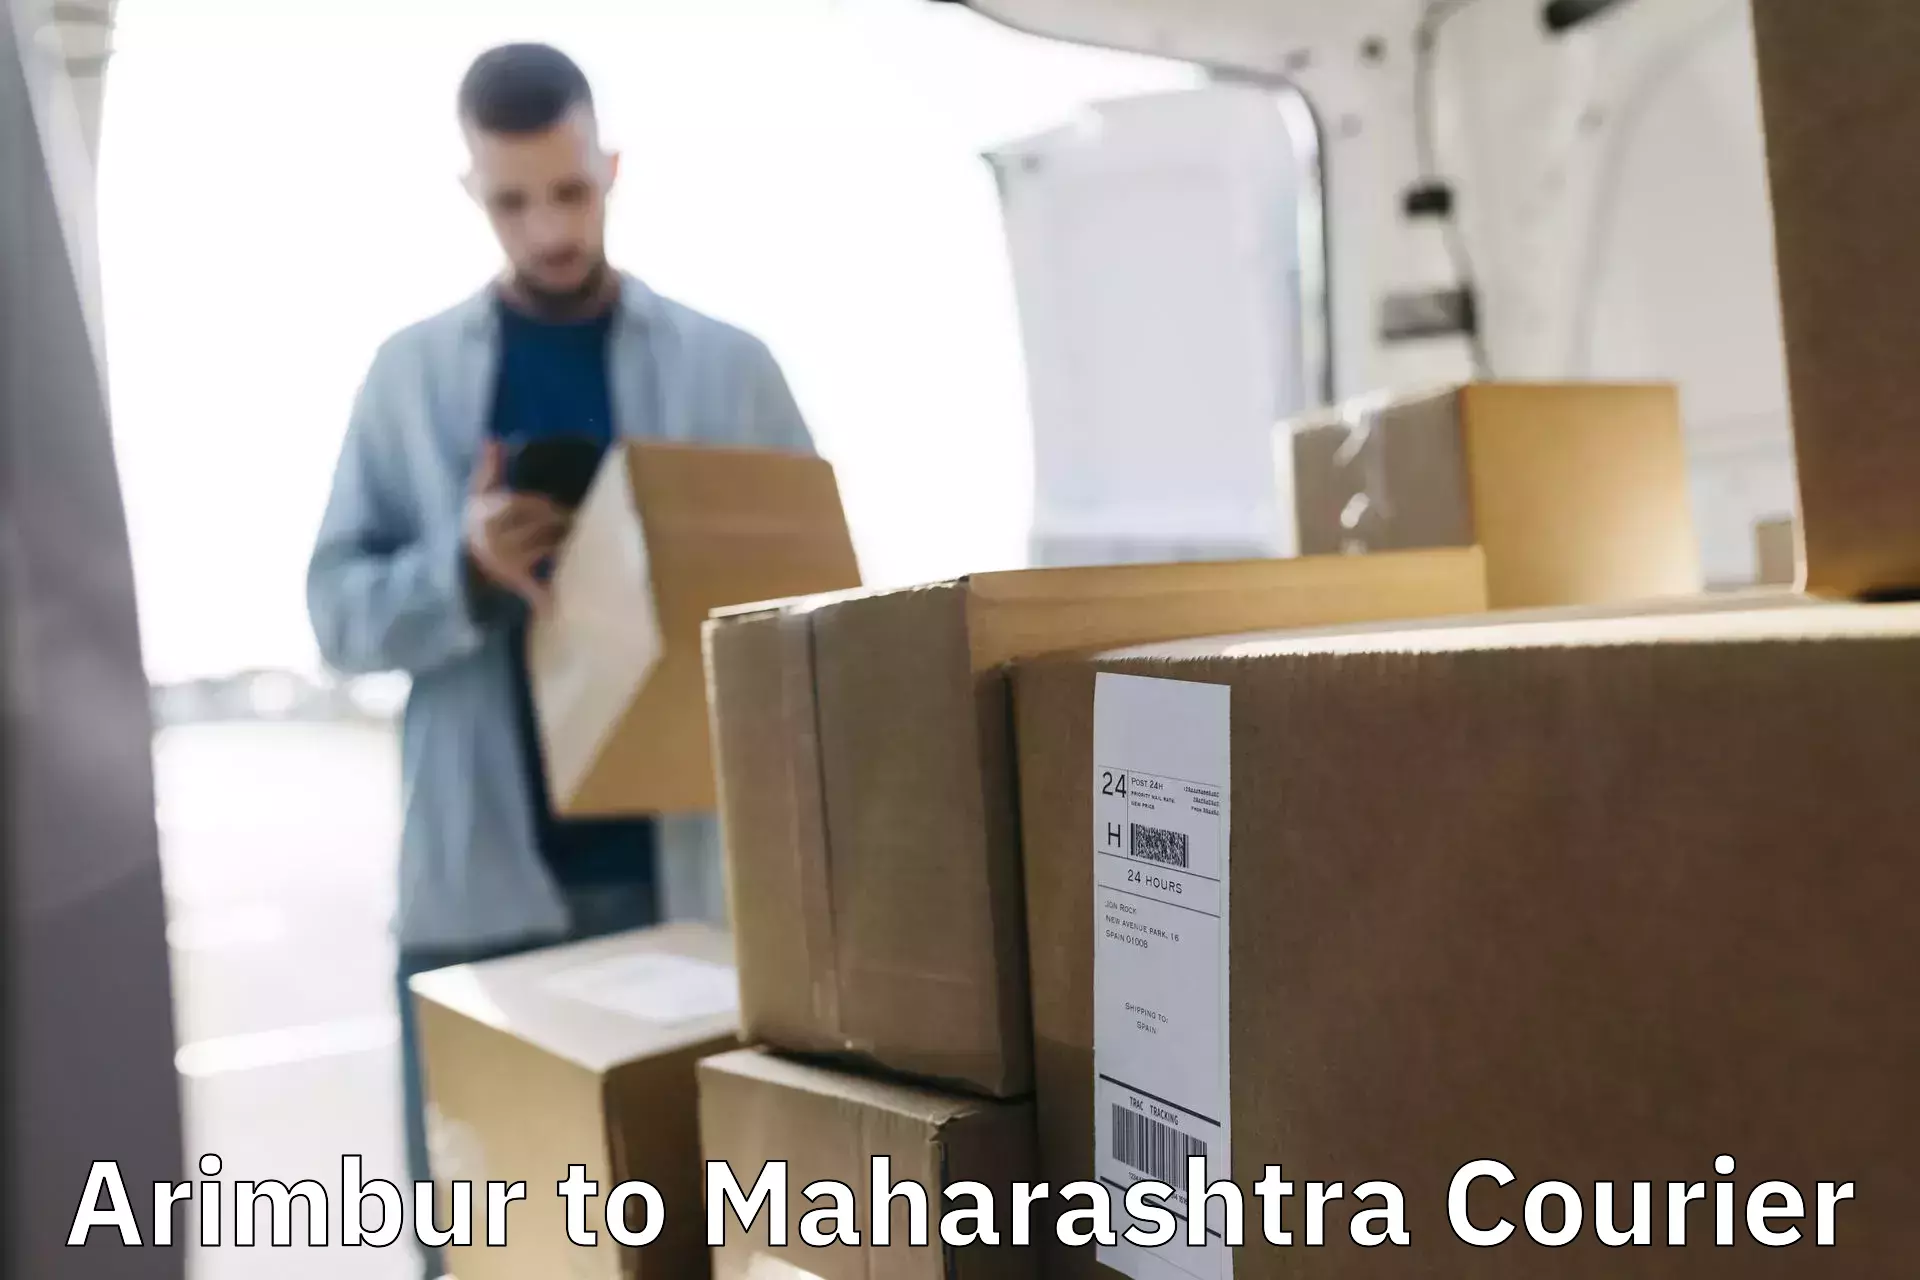 Courier service innovation in Arimbur to Lanja